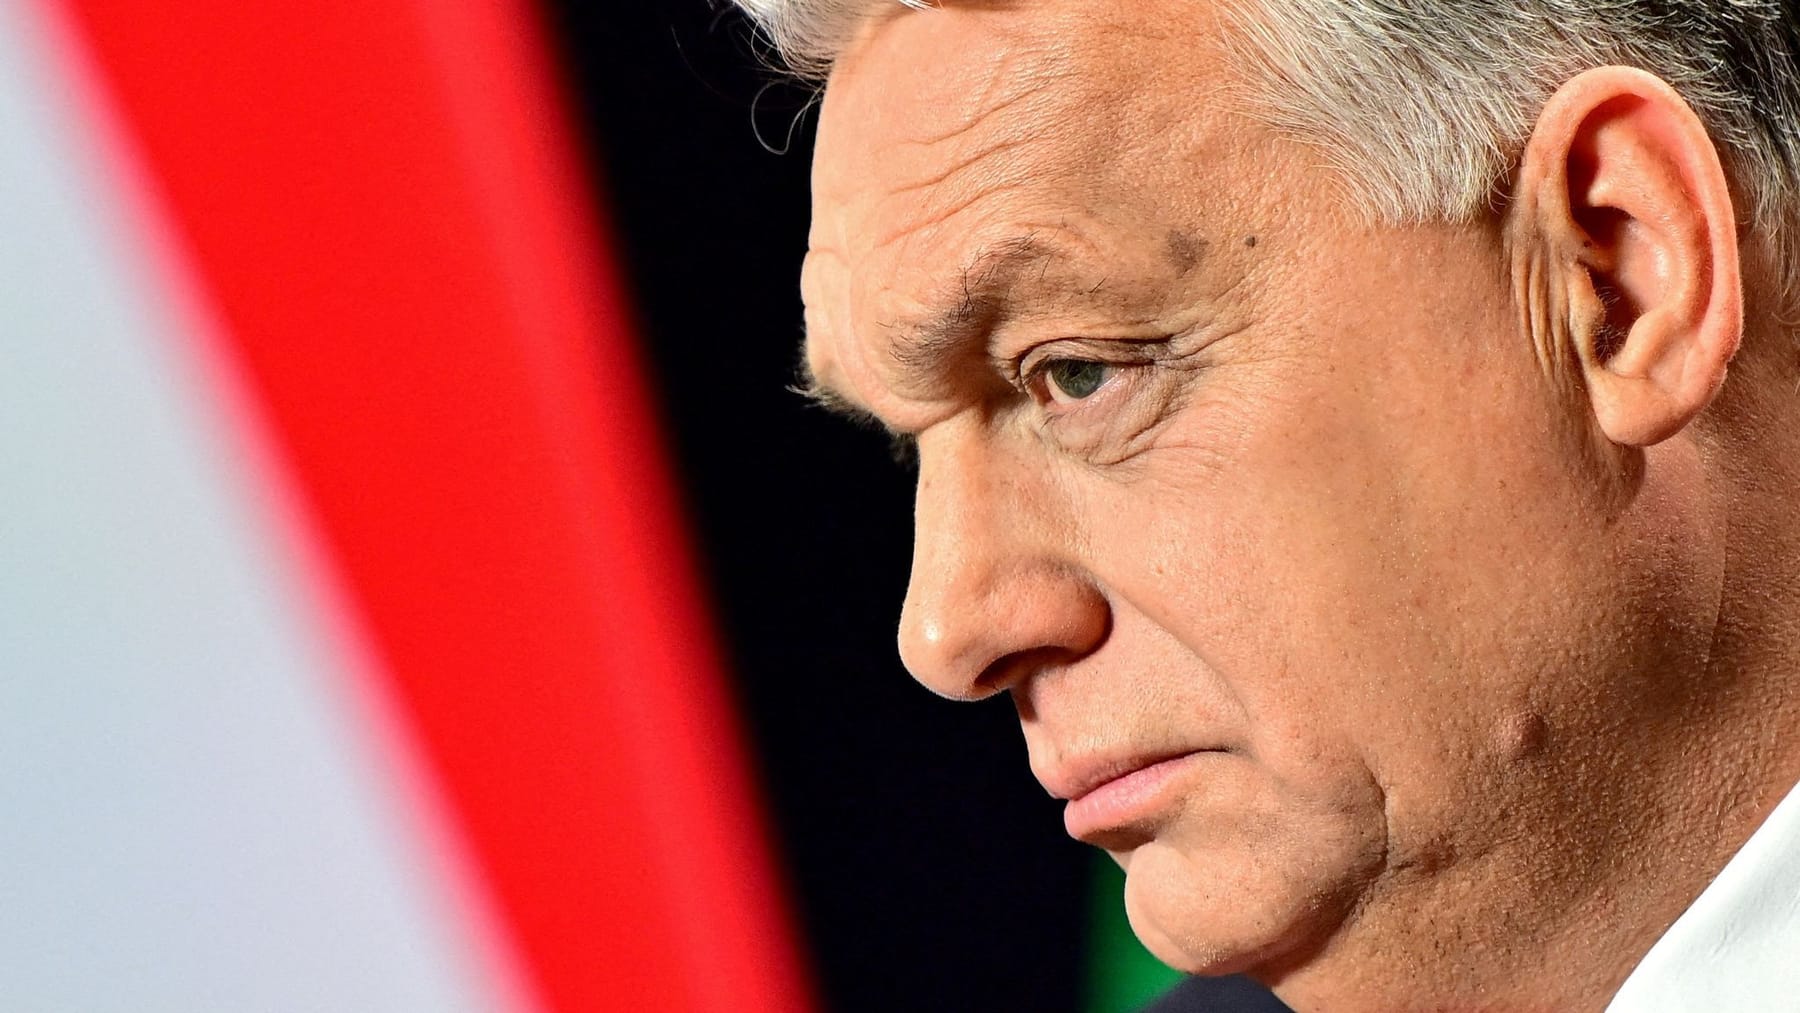 The EU has watched Viktor Orbán for far too long - Archyde